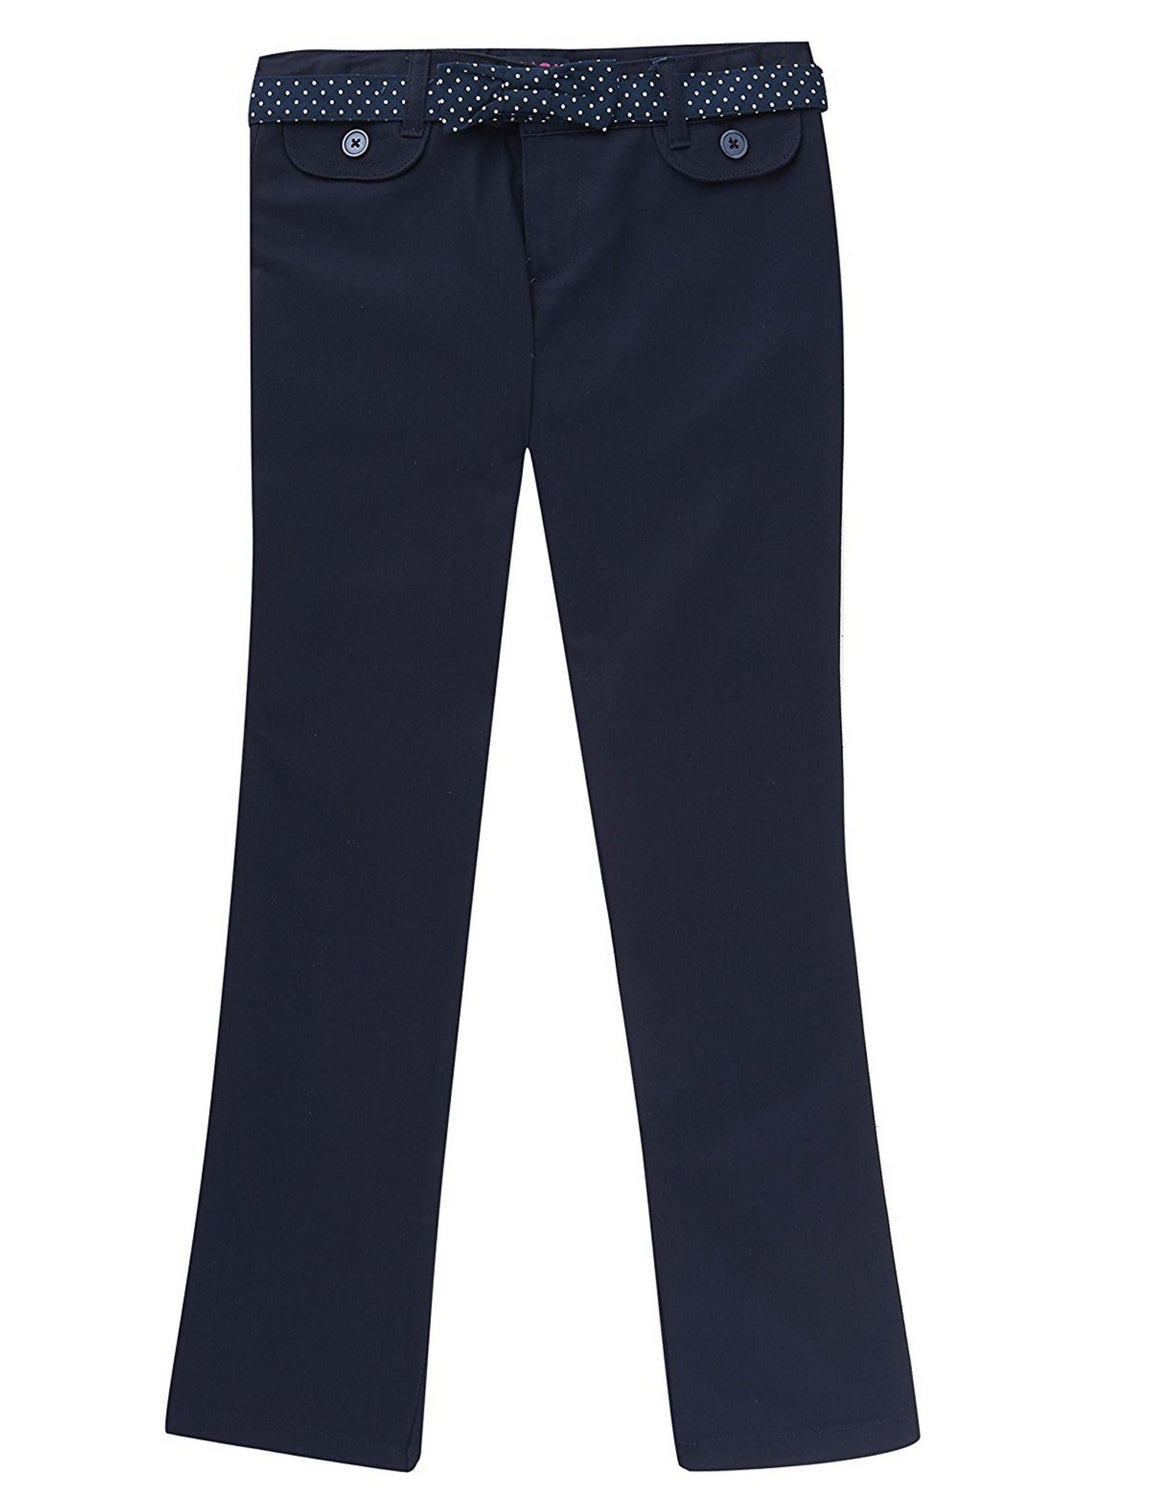 Khaki Stretchy School Uniform Skinny Pants (Plus Sizes Available) –  SohoGirl.com